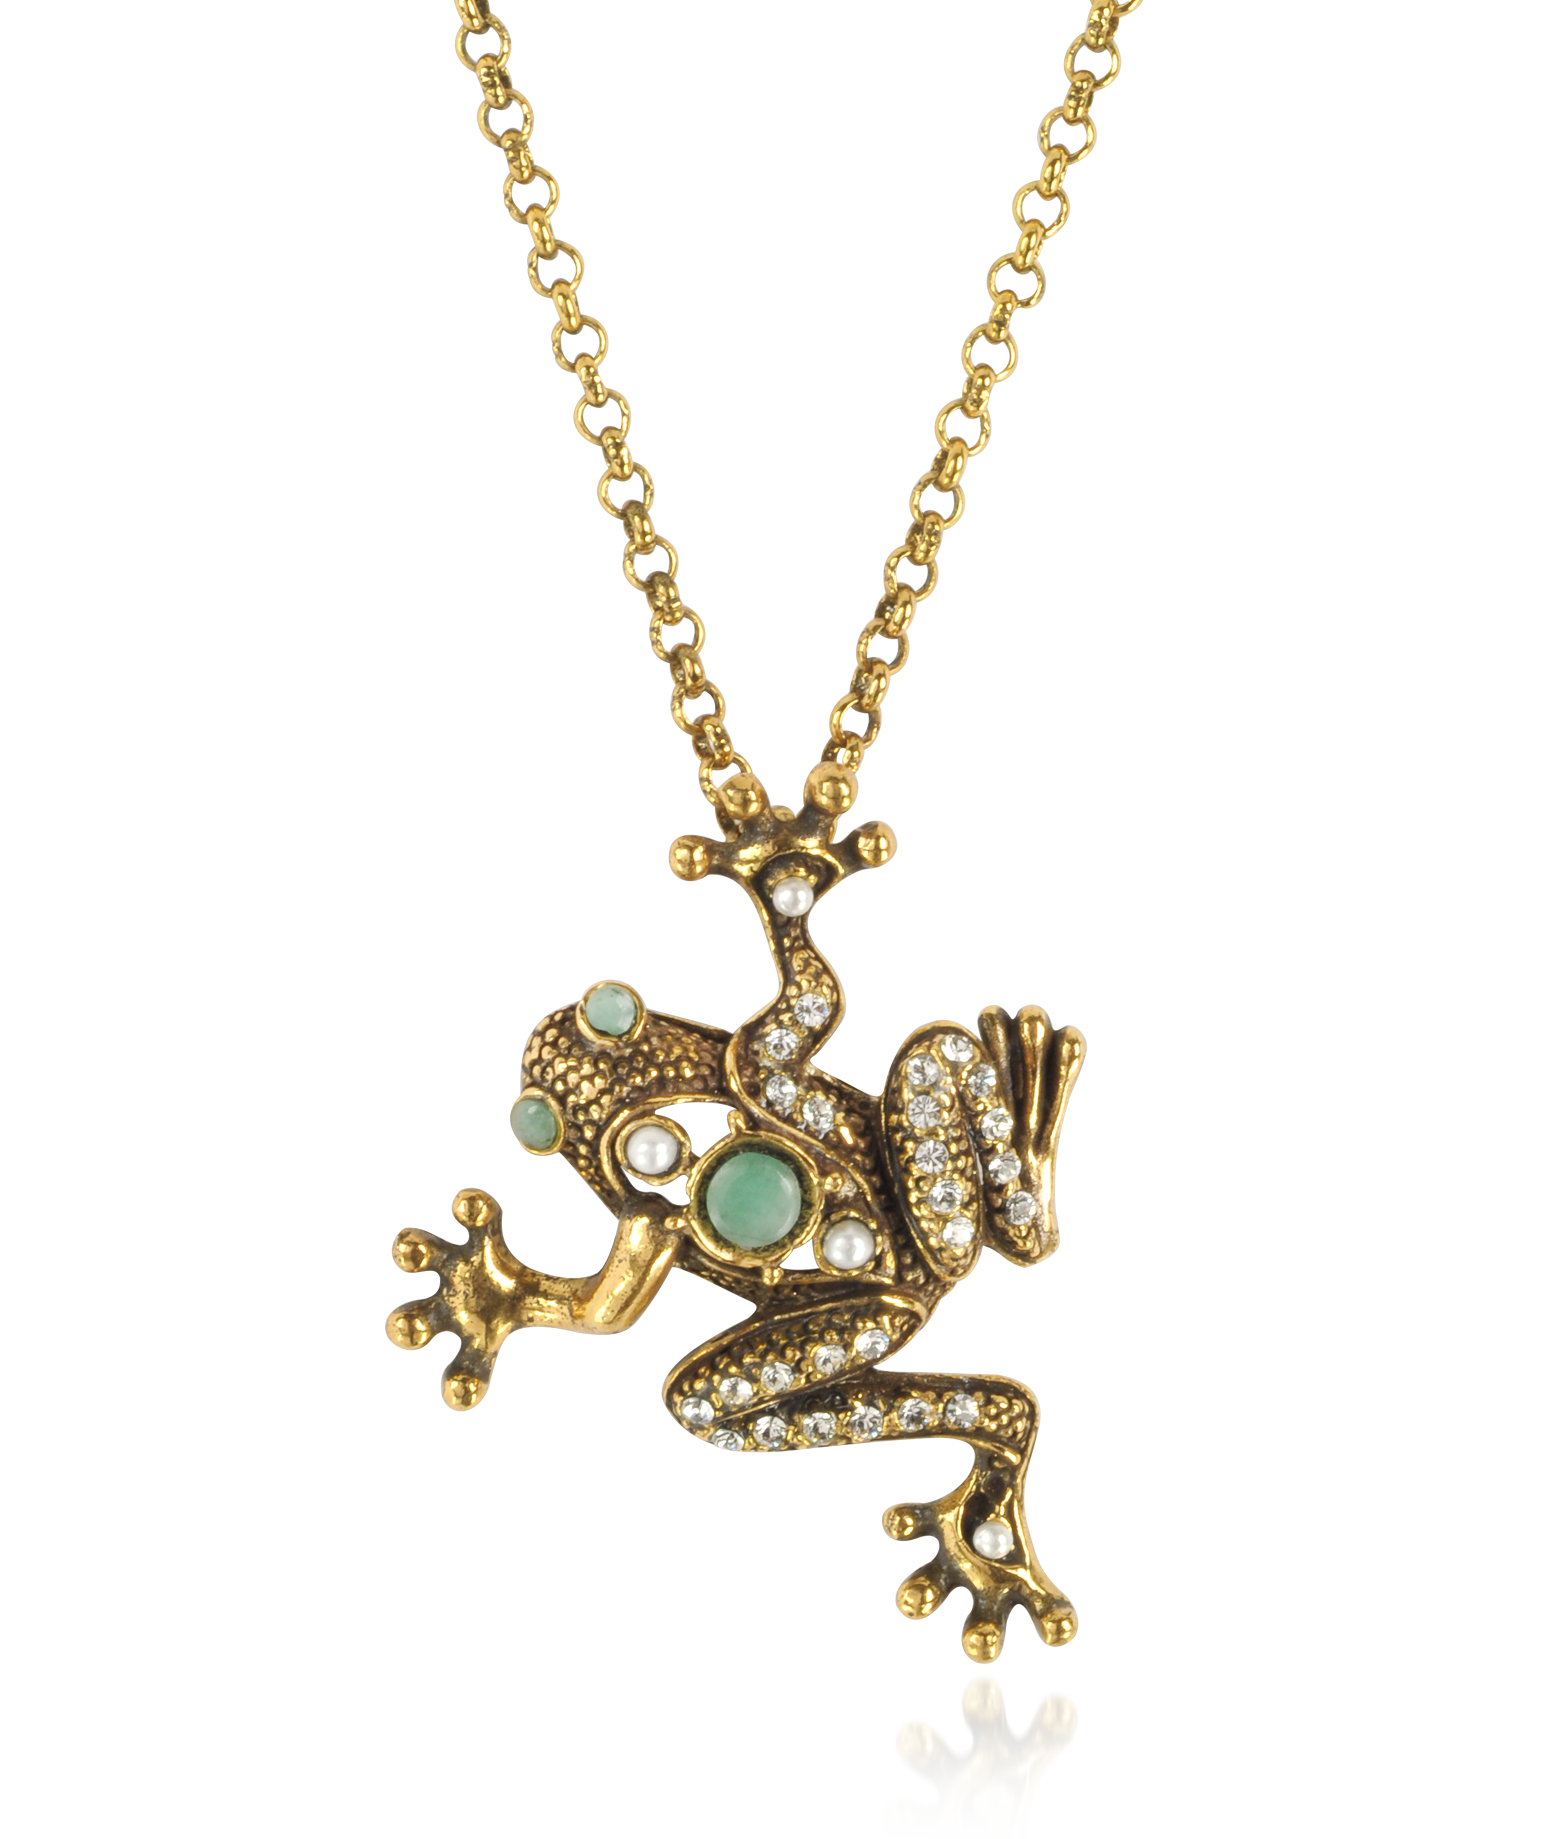 Alcozer & J Necklaces Brass Frog Necklace In Doré